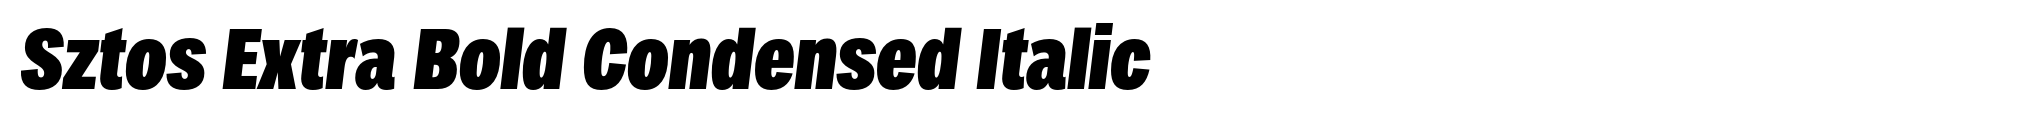 Sztos Extra Bold Condensed Italic image